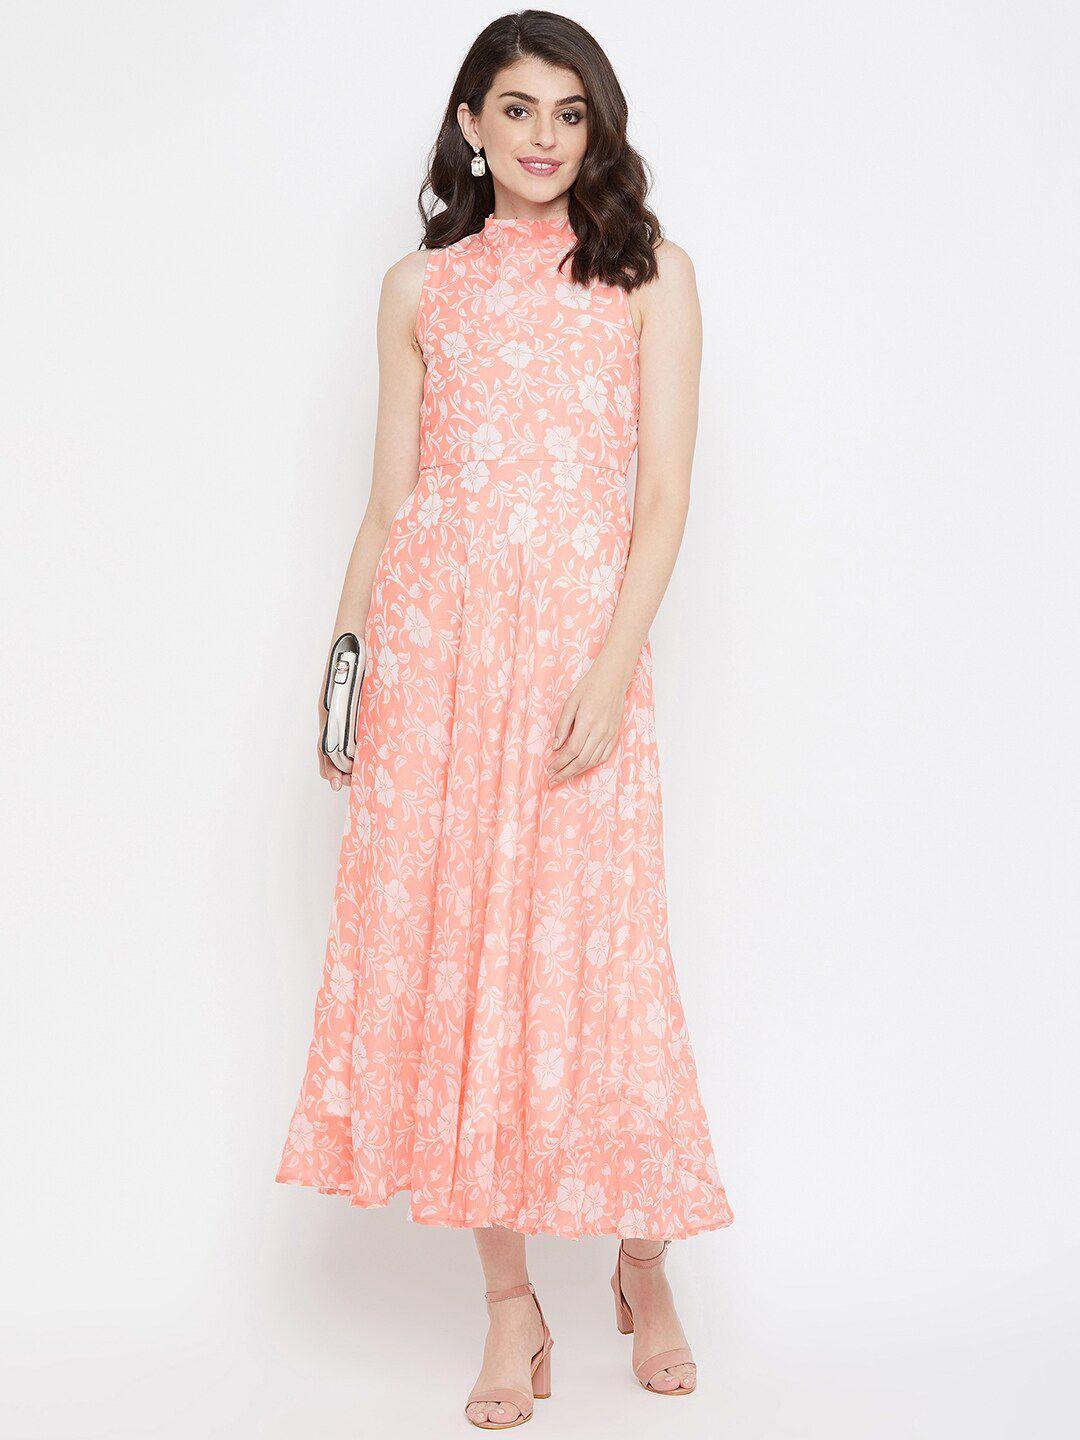 la zoire pink & white floral printed georgette maxi dress